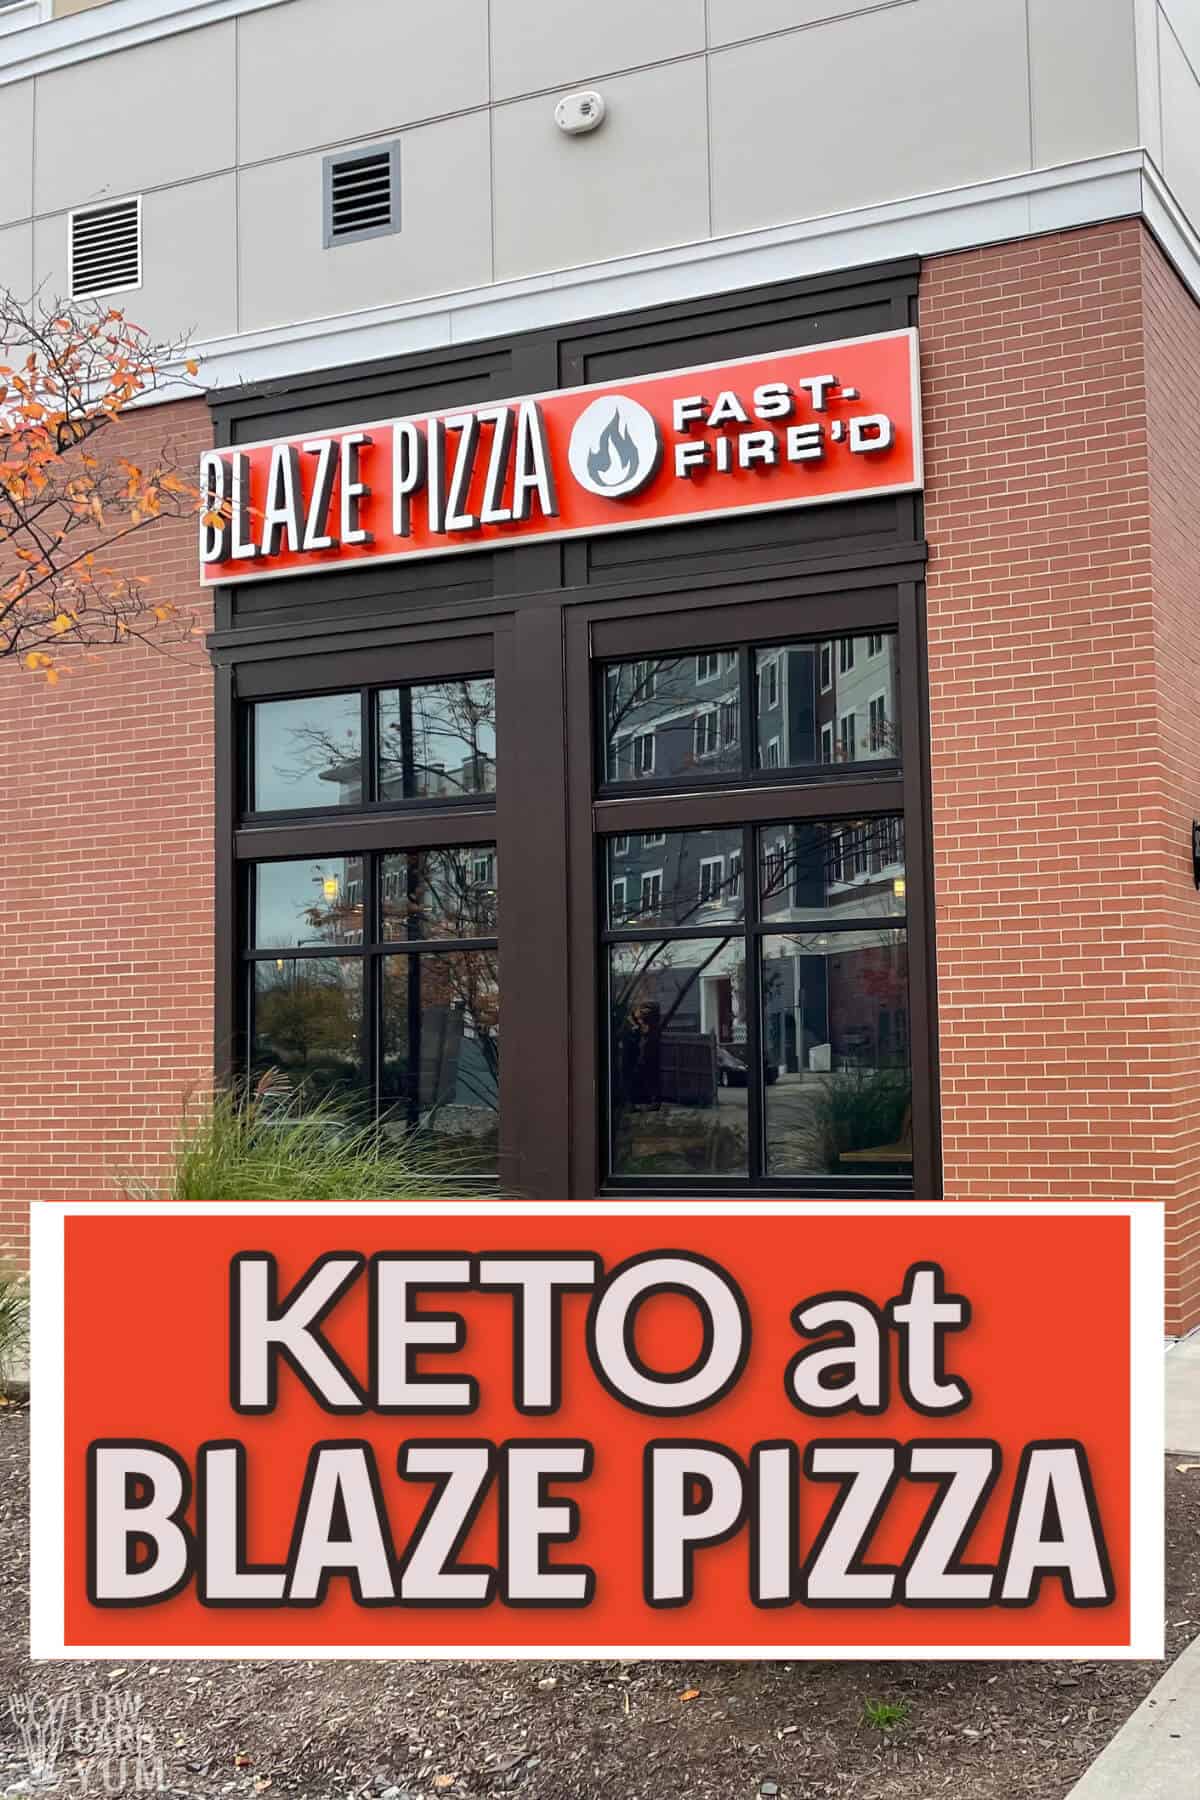 keto at blaze pizza cover image